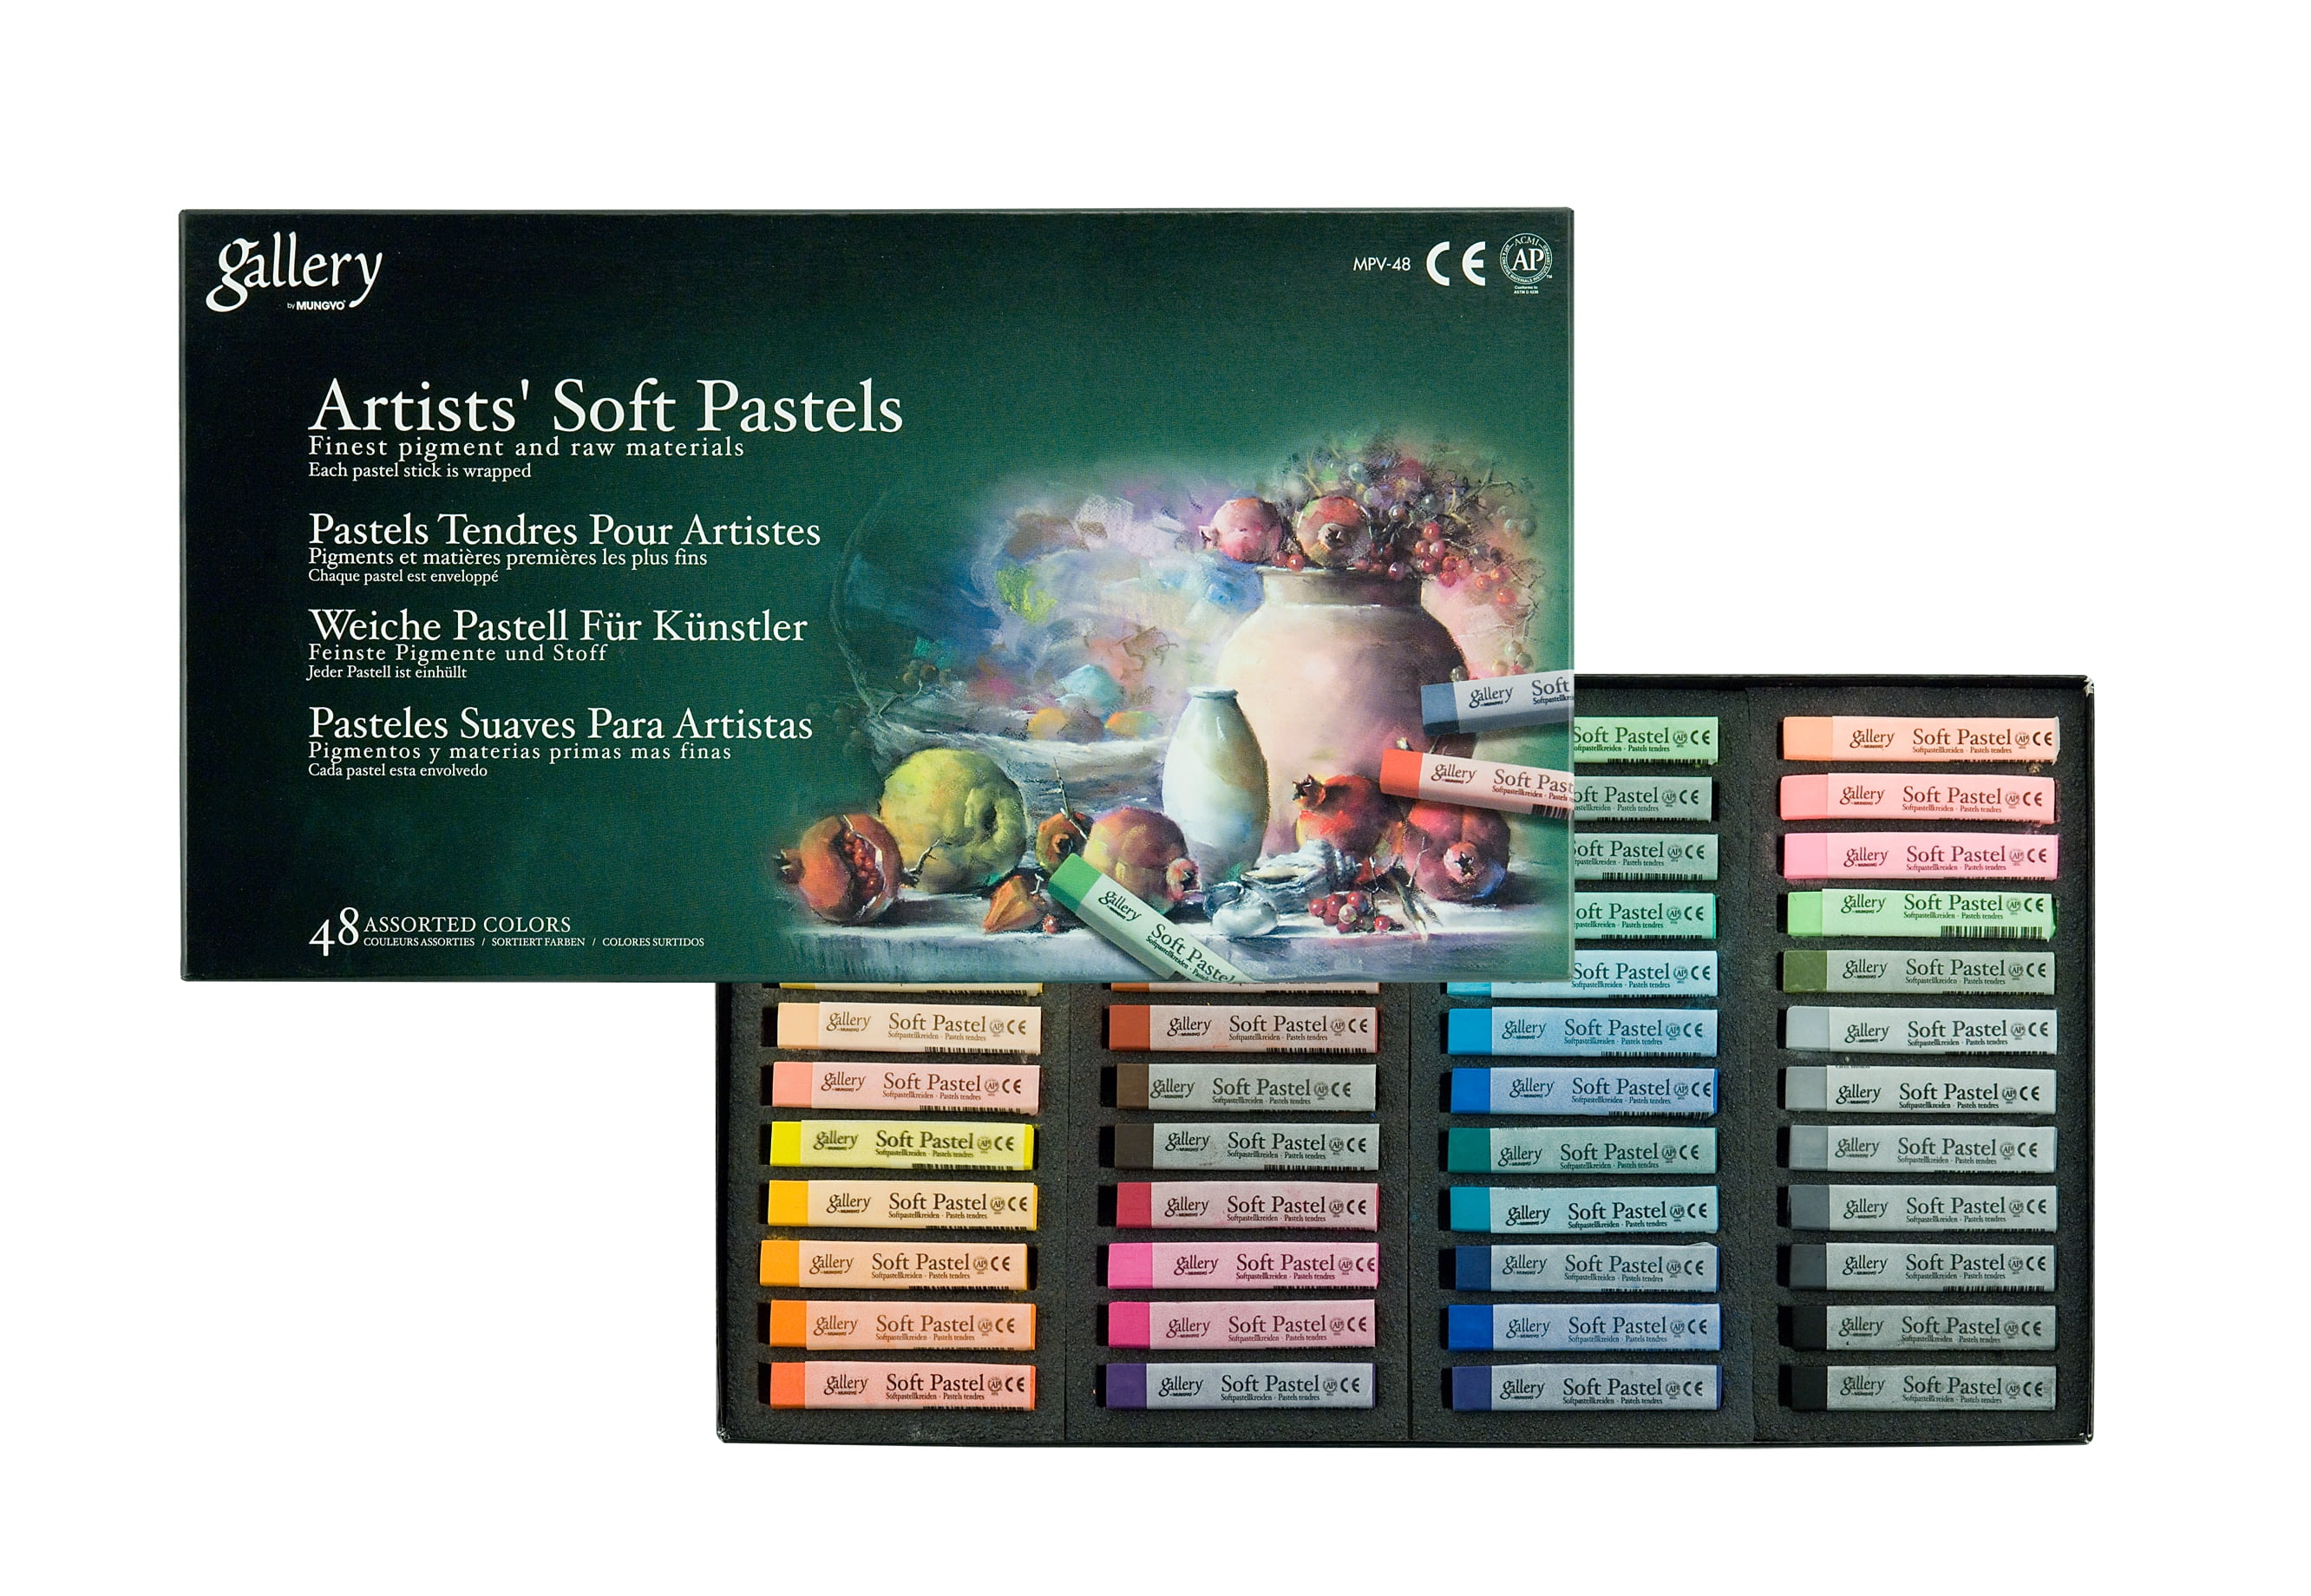 Mungyo Gallery Standard Soft Pastels Cardboard Box Set of 32 Half Sticks -  Assorted Colors